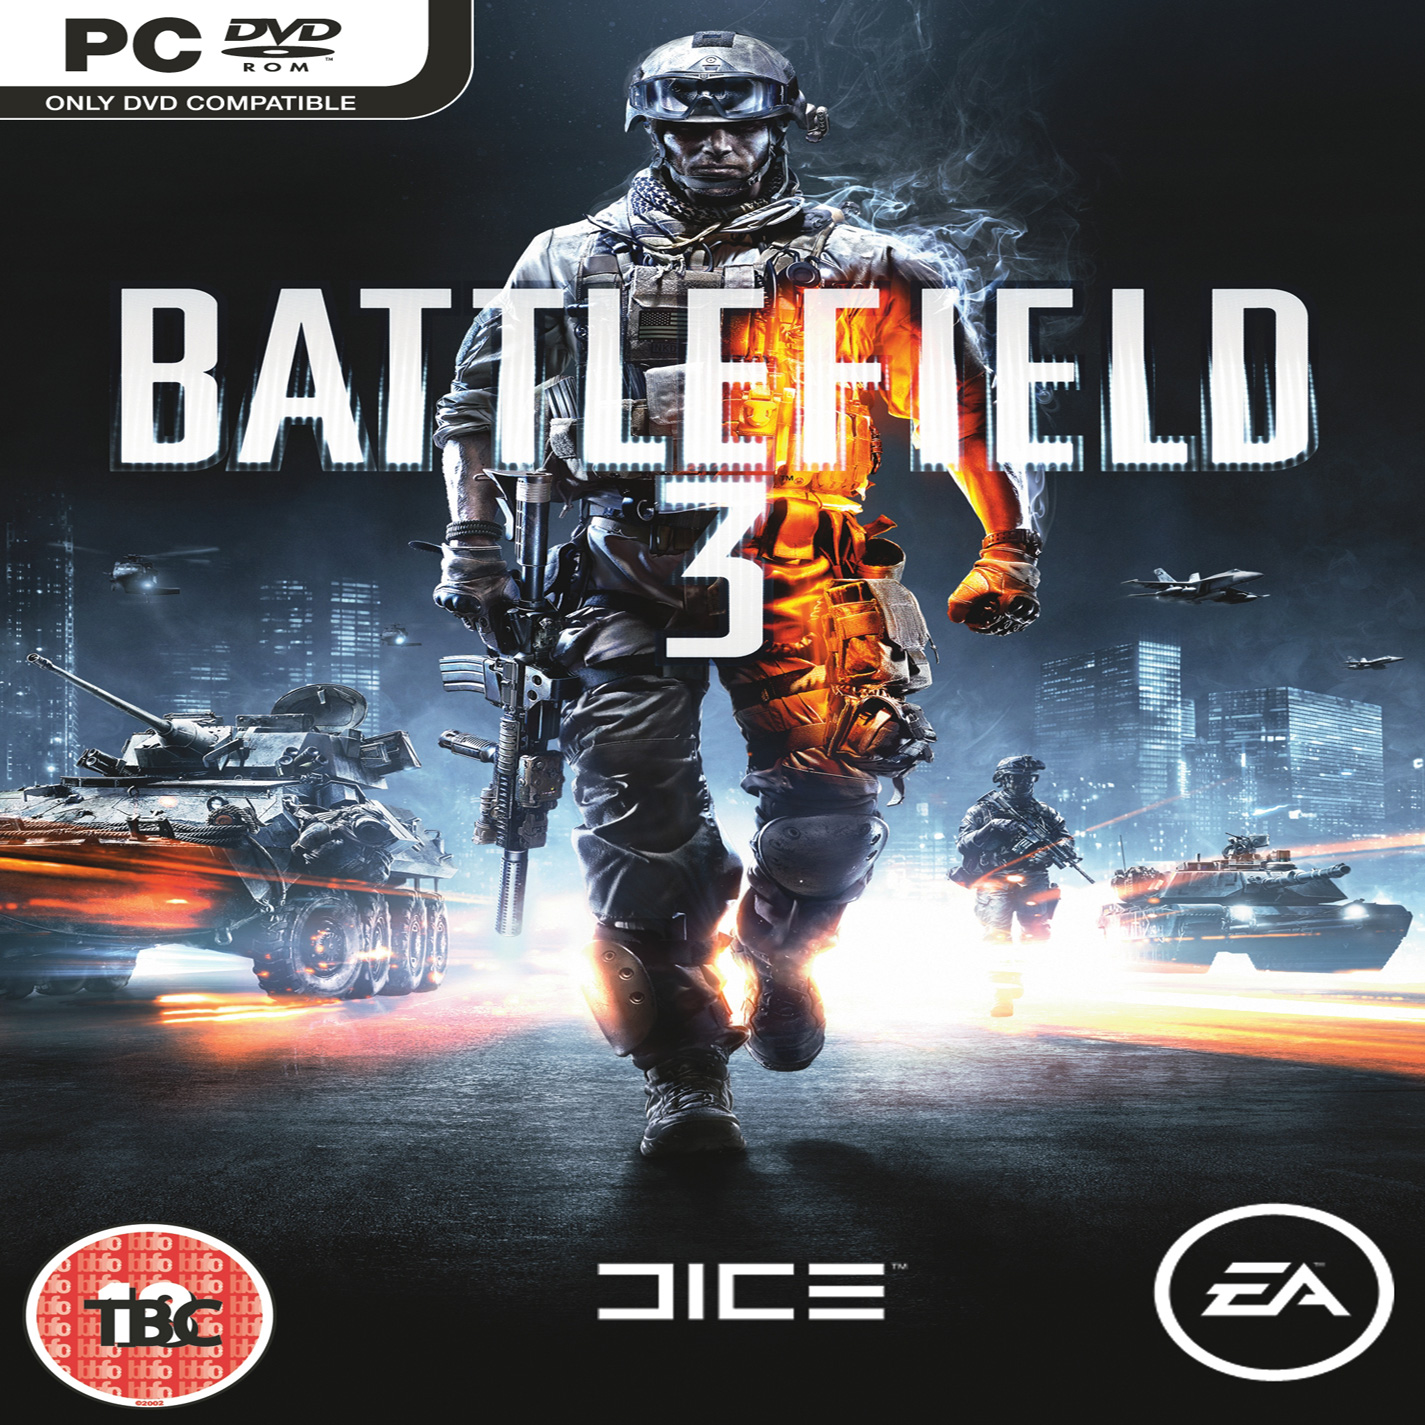 Battlefield 3 - predn CD obal